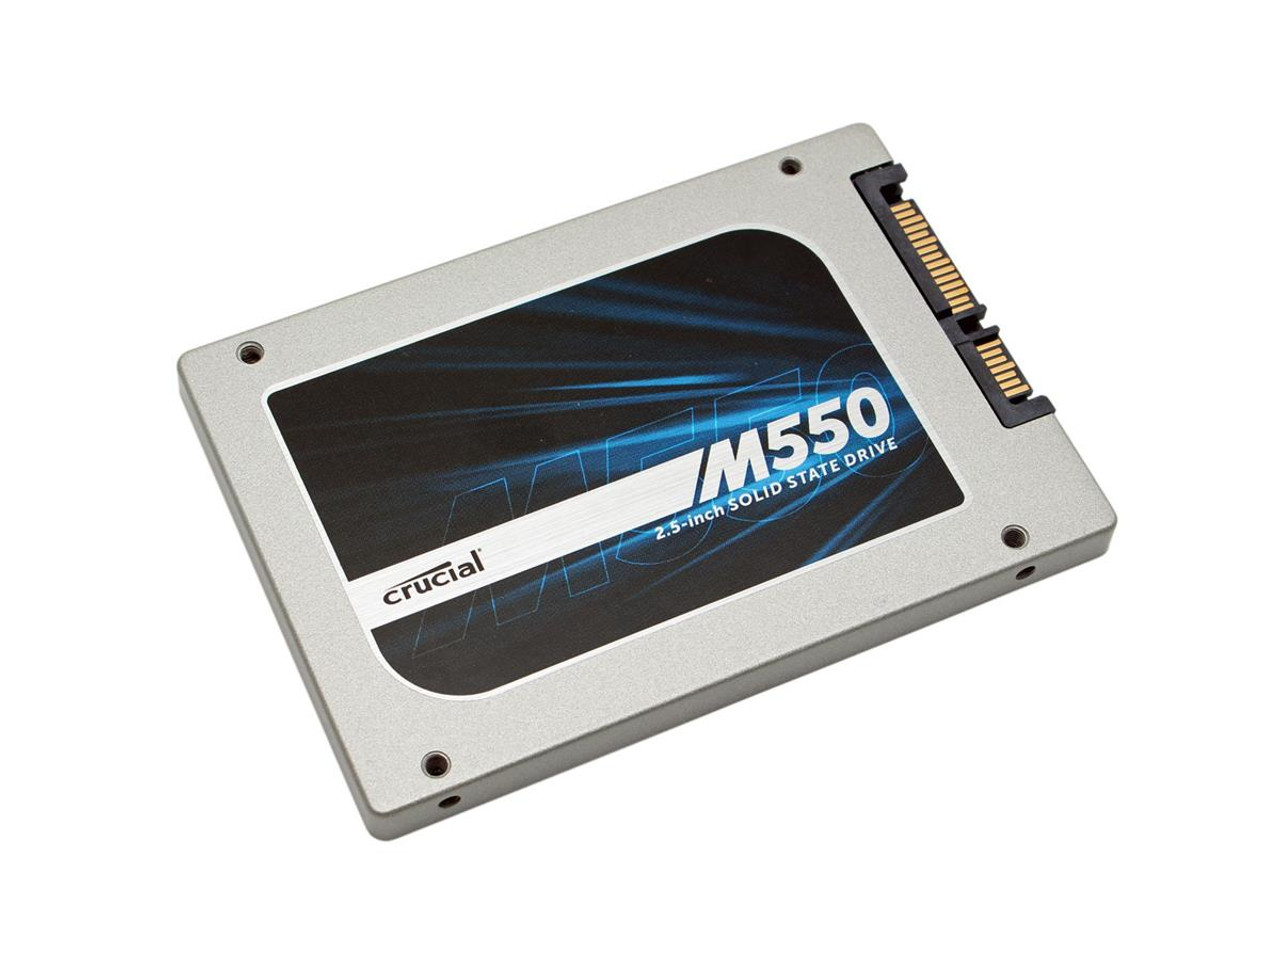 CT128M550SSD1 Crucial M550 Series 128GB MLC SATA 6Gbps 2.5-inch Internal Solid Drive